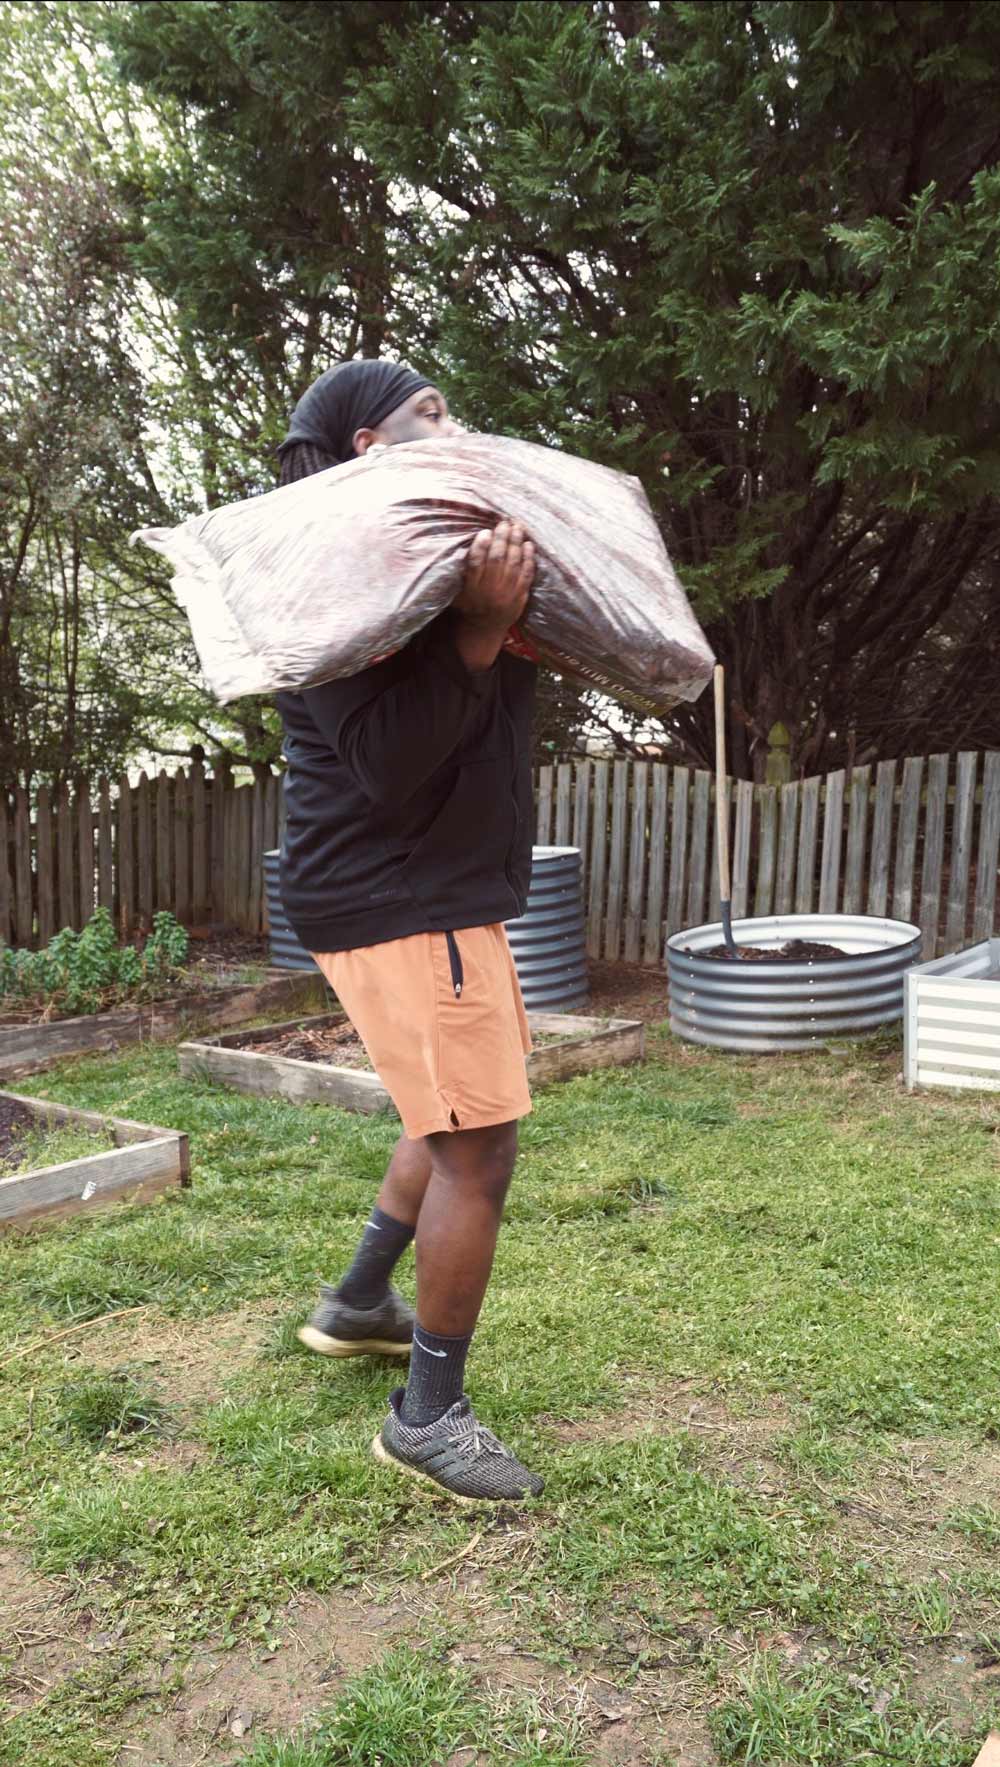 A man carrying a bag of mulch.